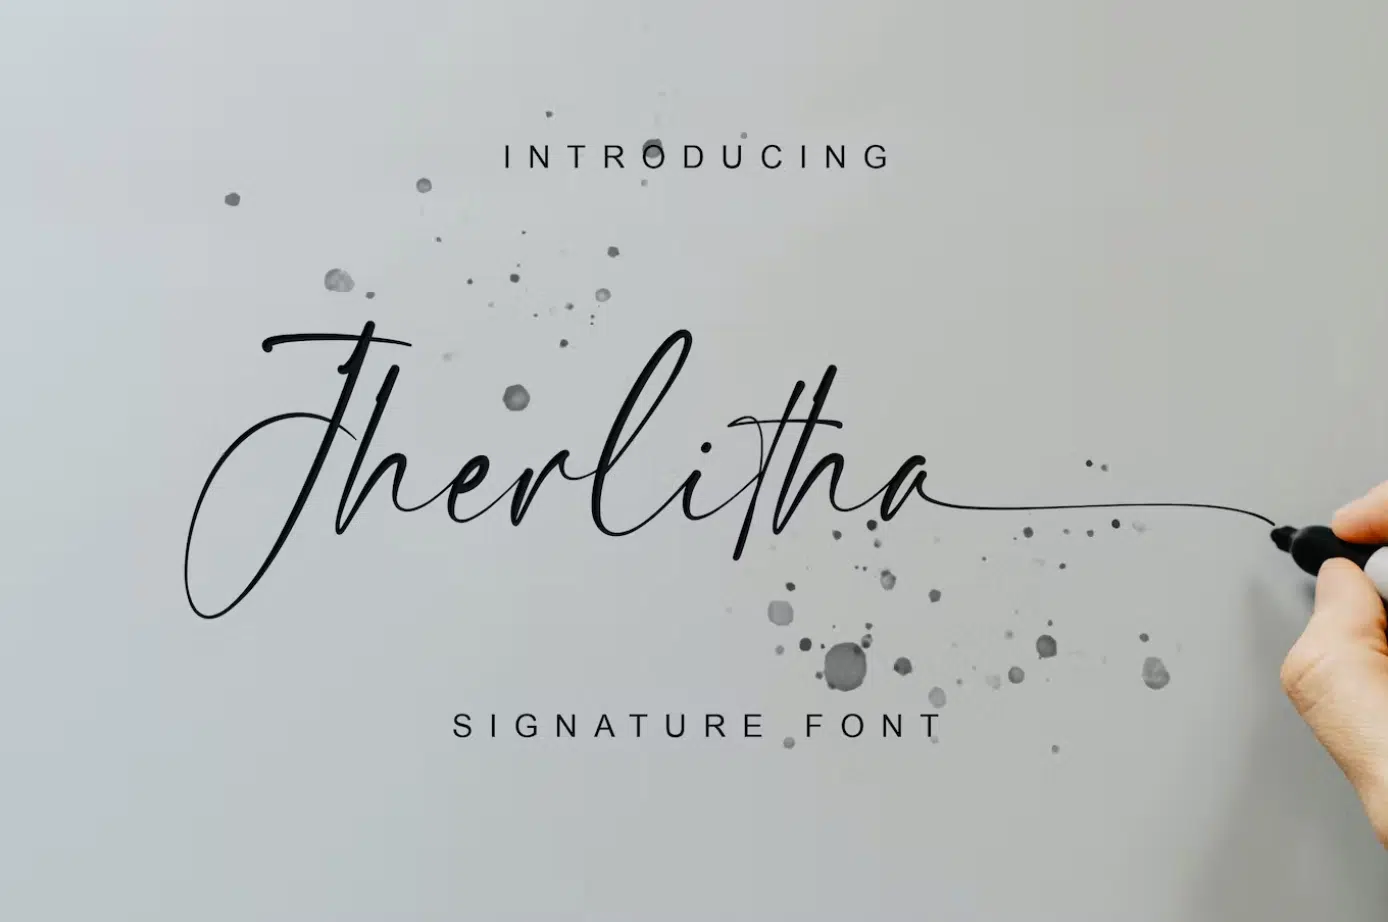 Jherlitha - Signature Font